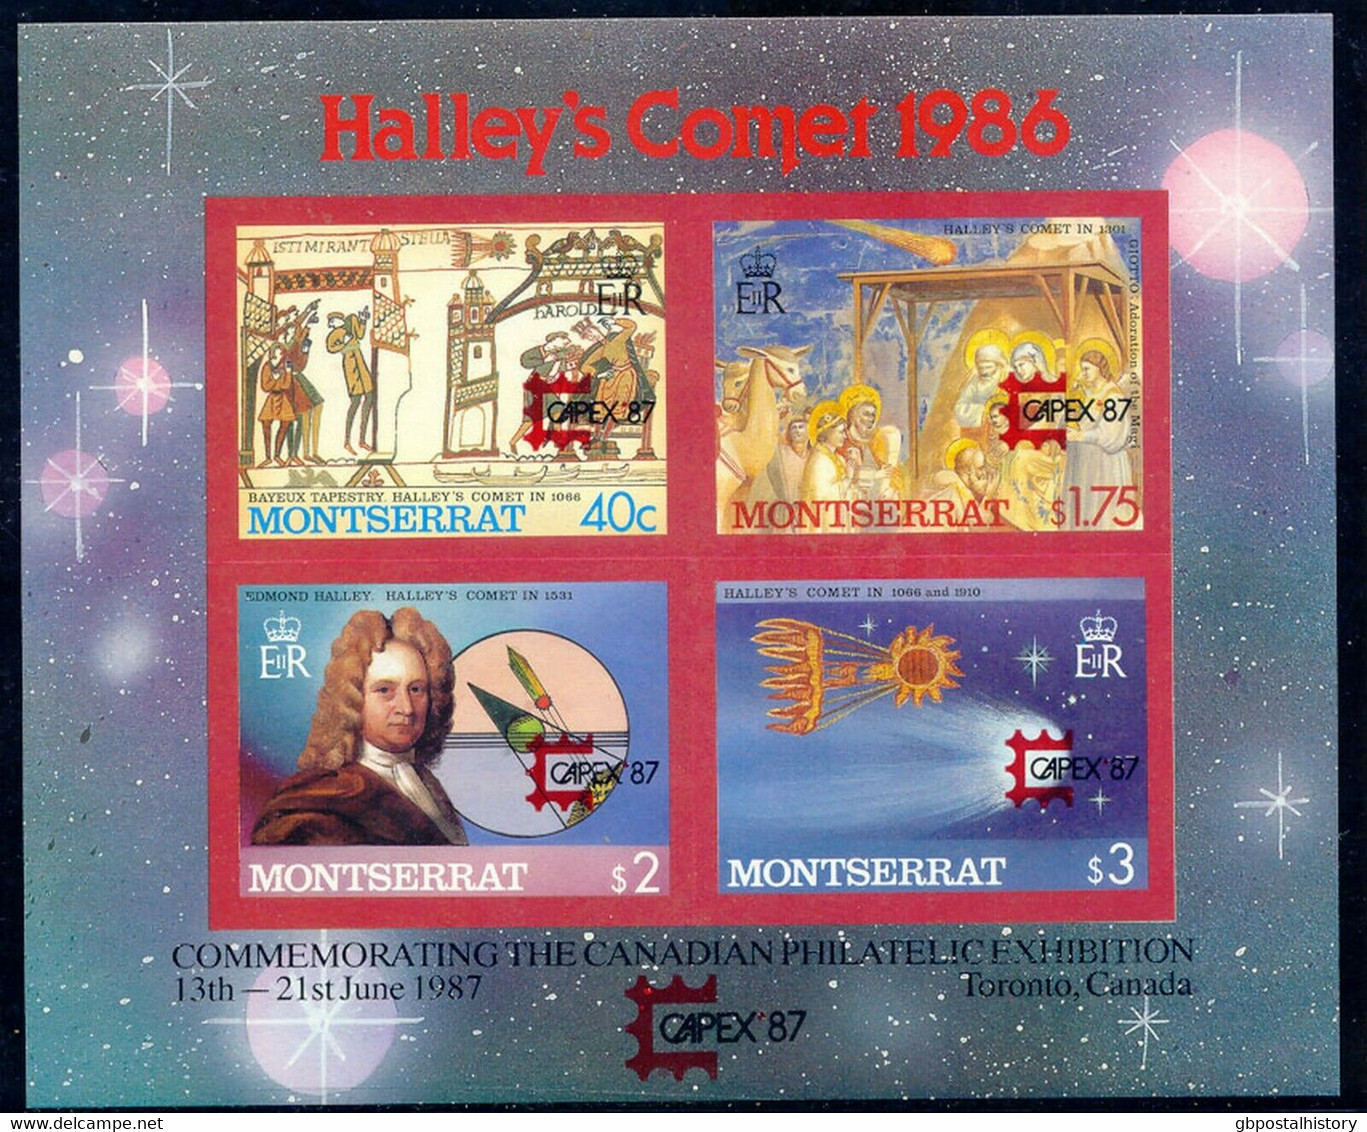 MONTSERRAT 1987 Halley's Comet W CAPEX '87 Overprint Normal MS And IMPERFORATED - Montserrat